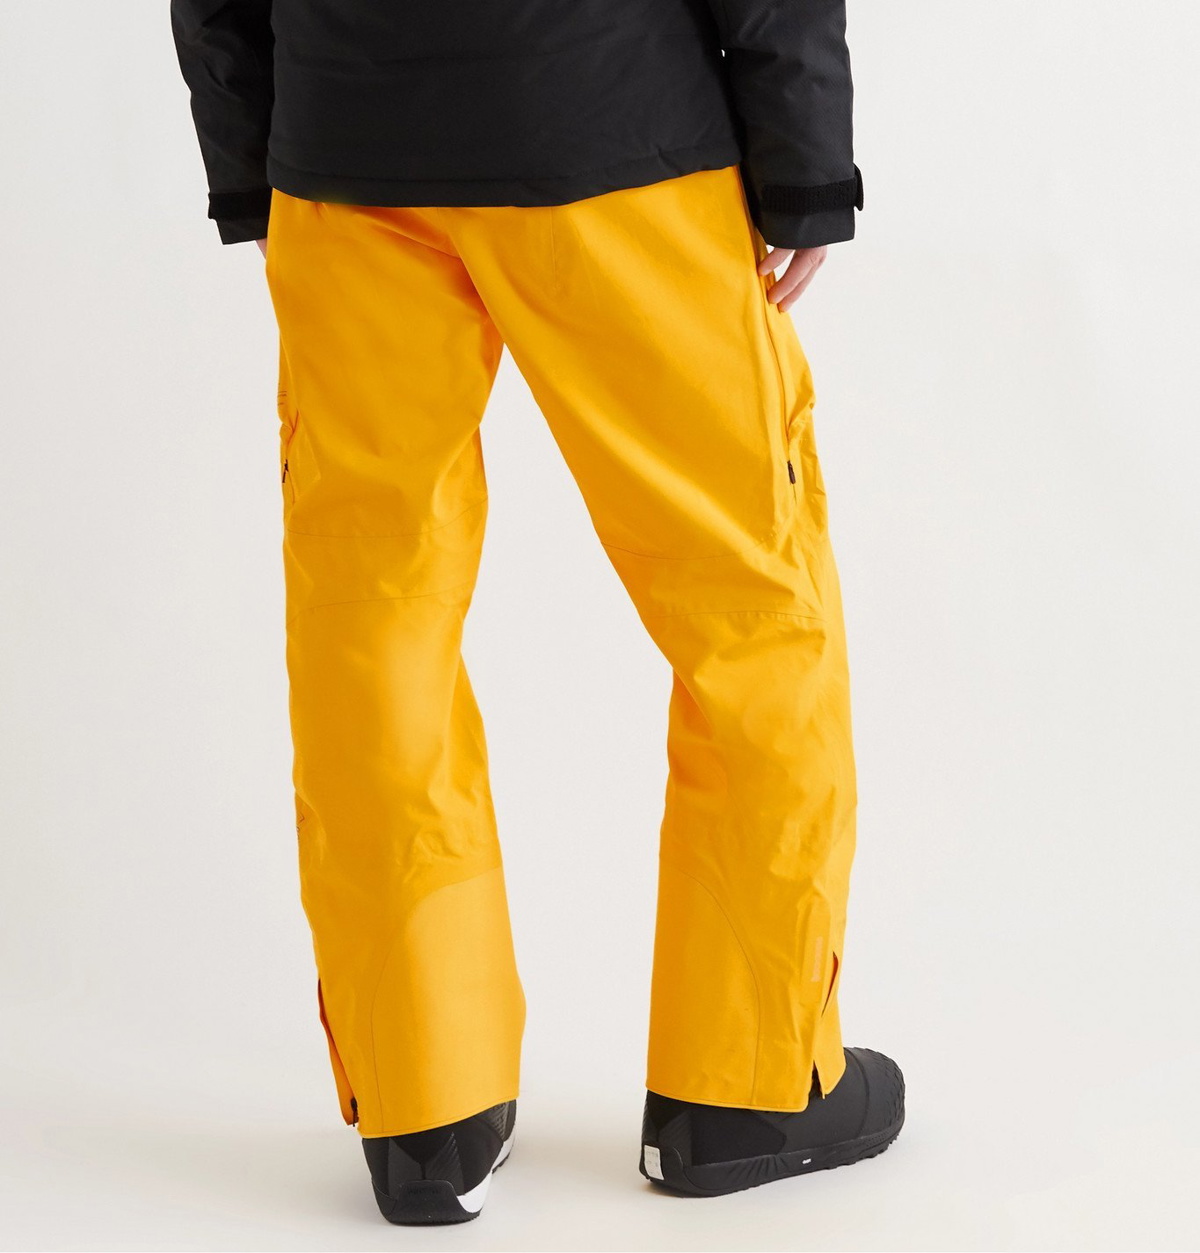 Burton Snowwear Pant Men Covert Pants : Amazon.co.uk: Fashion